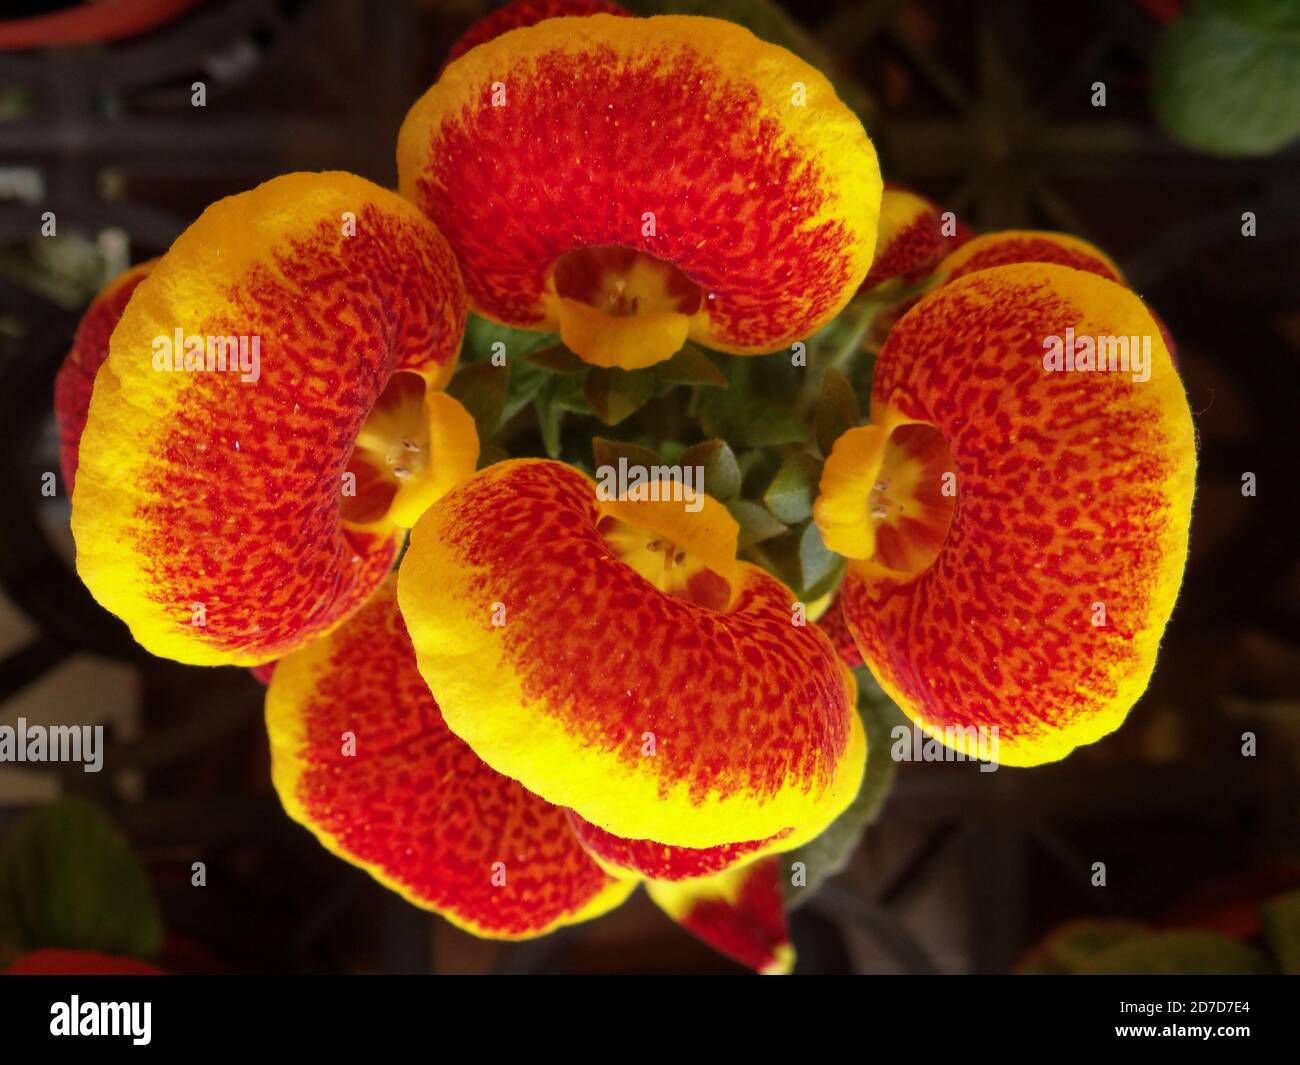 Closeup shot of blooming Crenateflower Calceolaria flowers Stock Photo